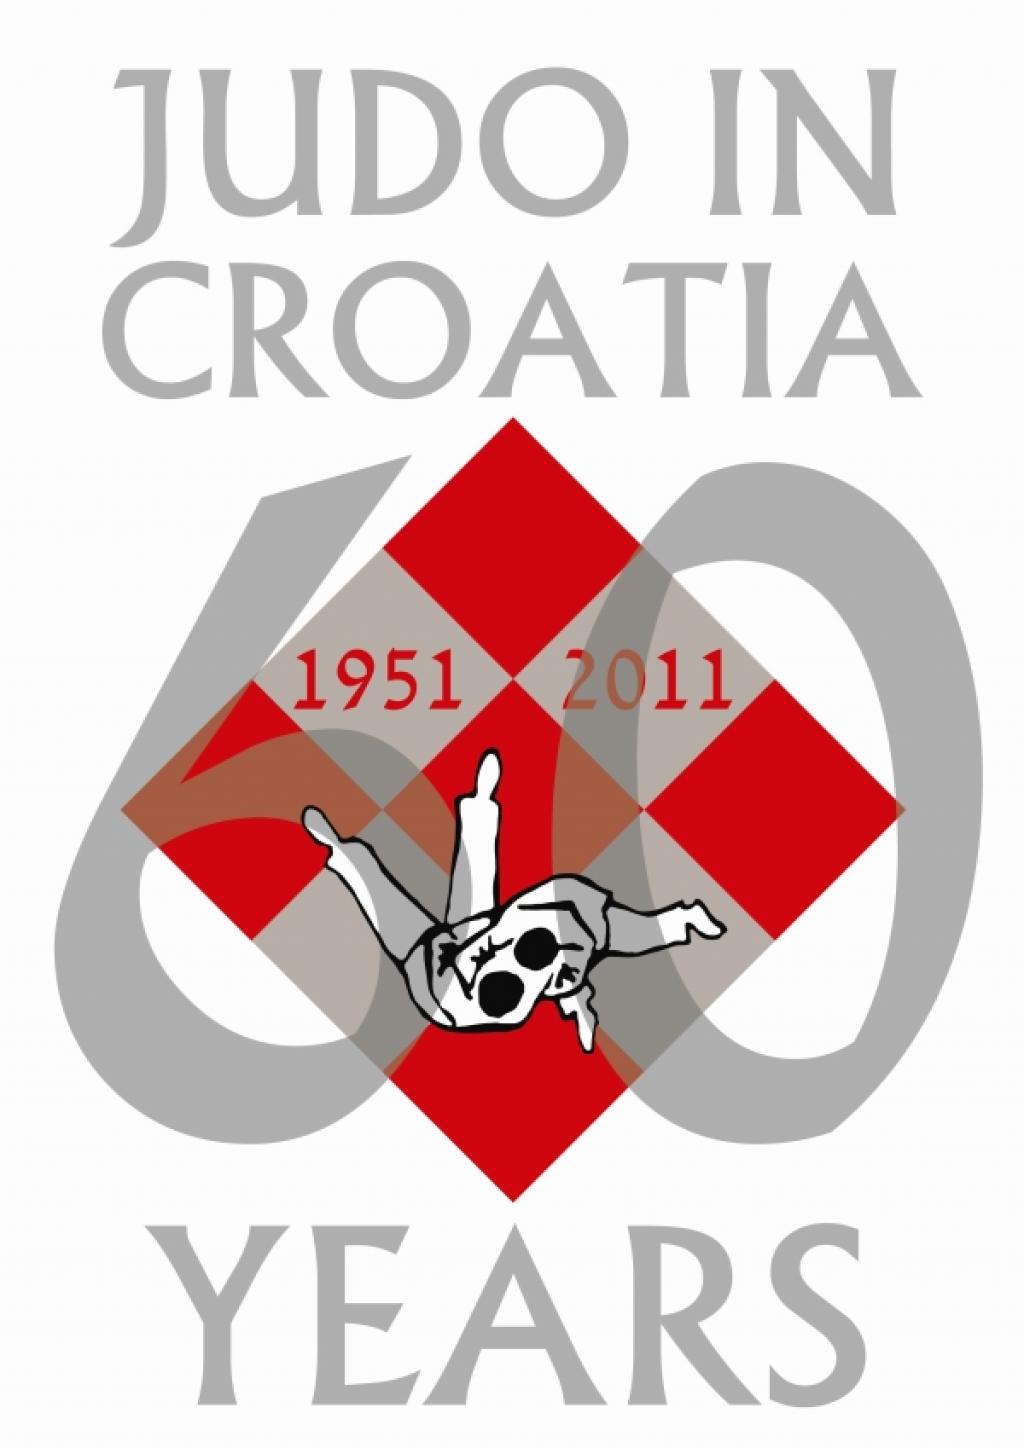 Croatian Judo Federation celebrates 60 anniversary